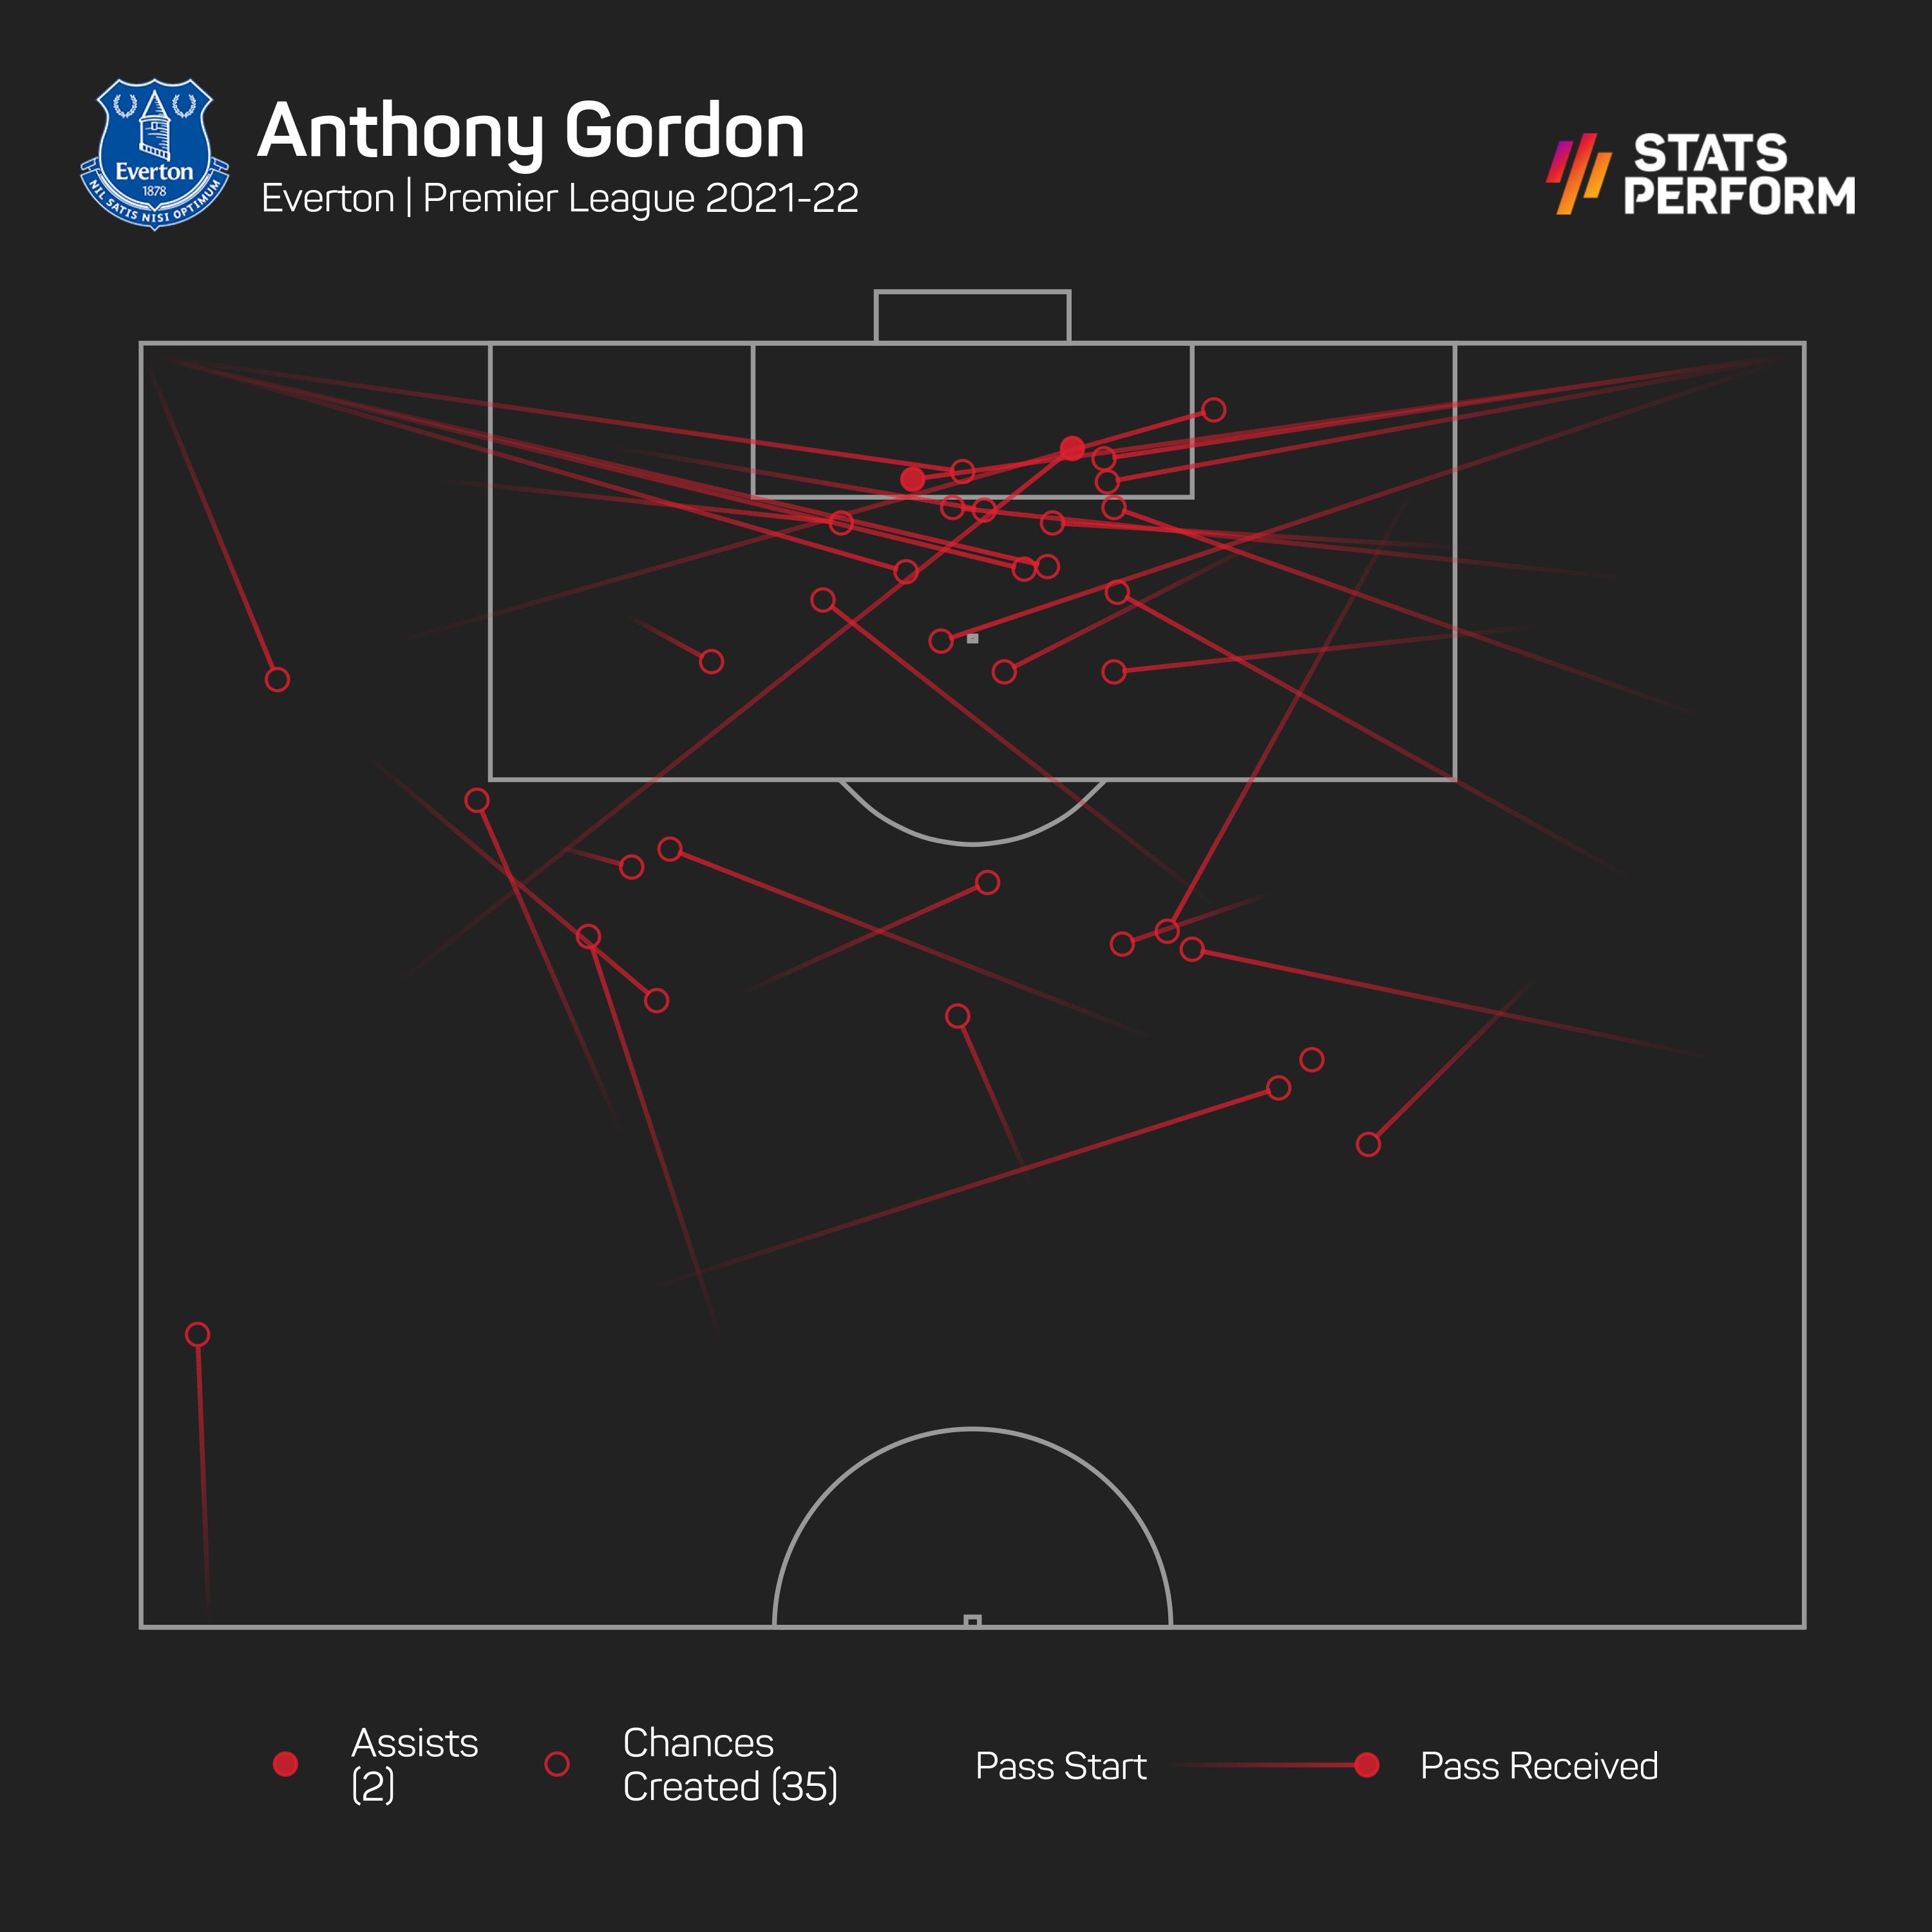 Anthony Gordon enjoyed a breakout year at Everton